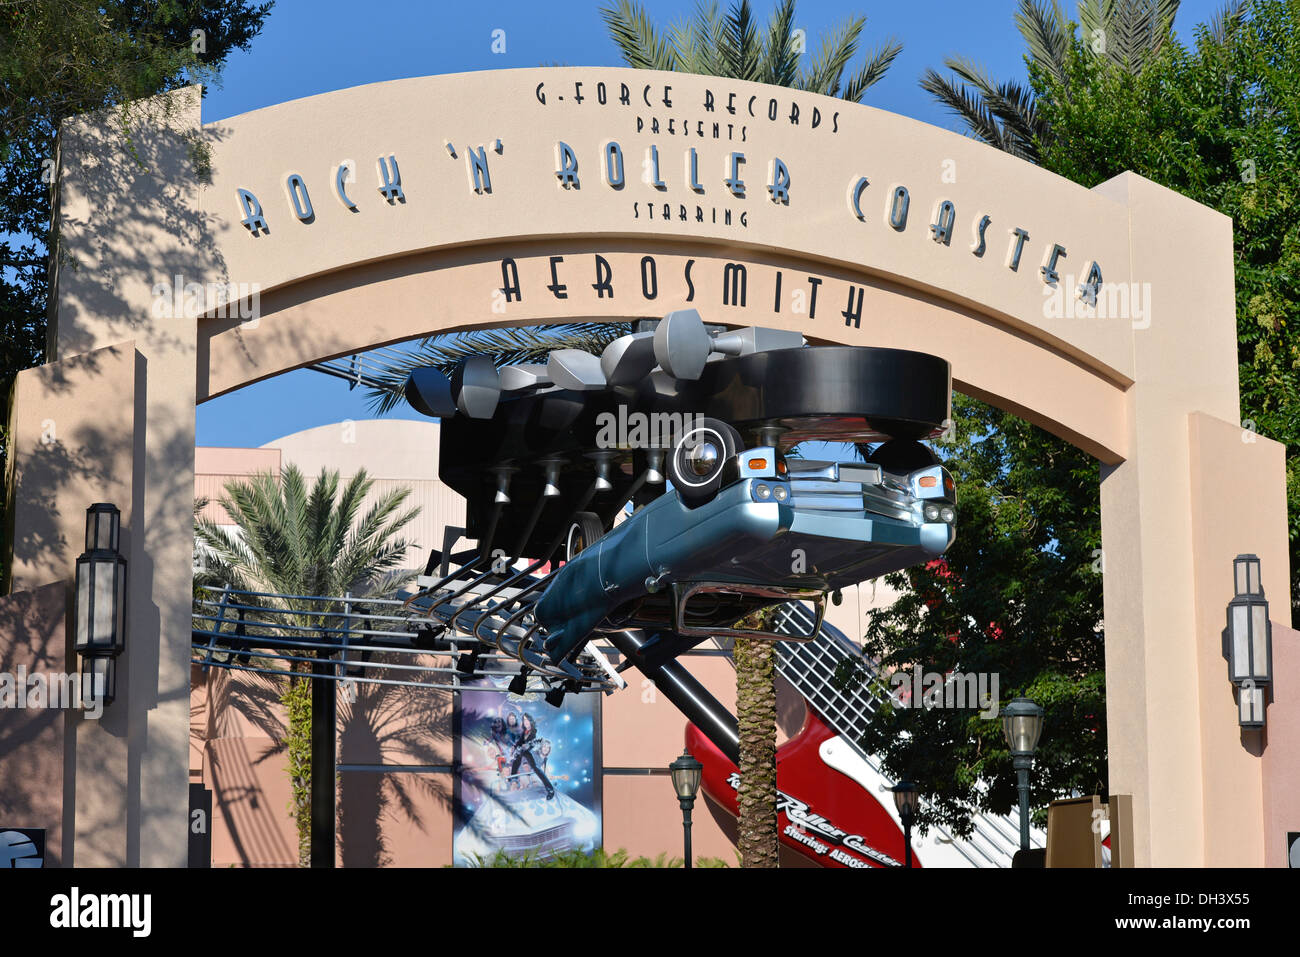 Rock N Roller Coaster Aerosmith am Hollywood Studios, Disney World Resort,  Orlando Florida Stockfotografie - Alamy